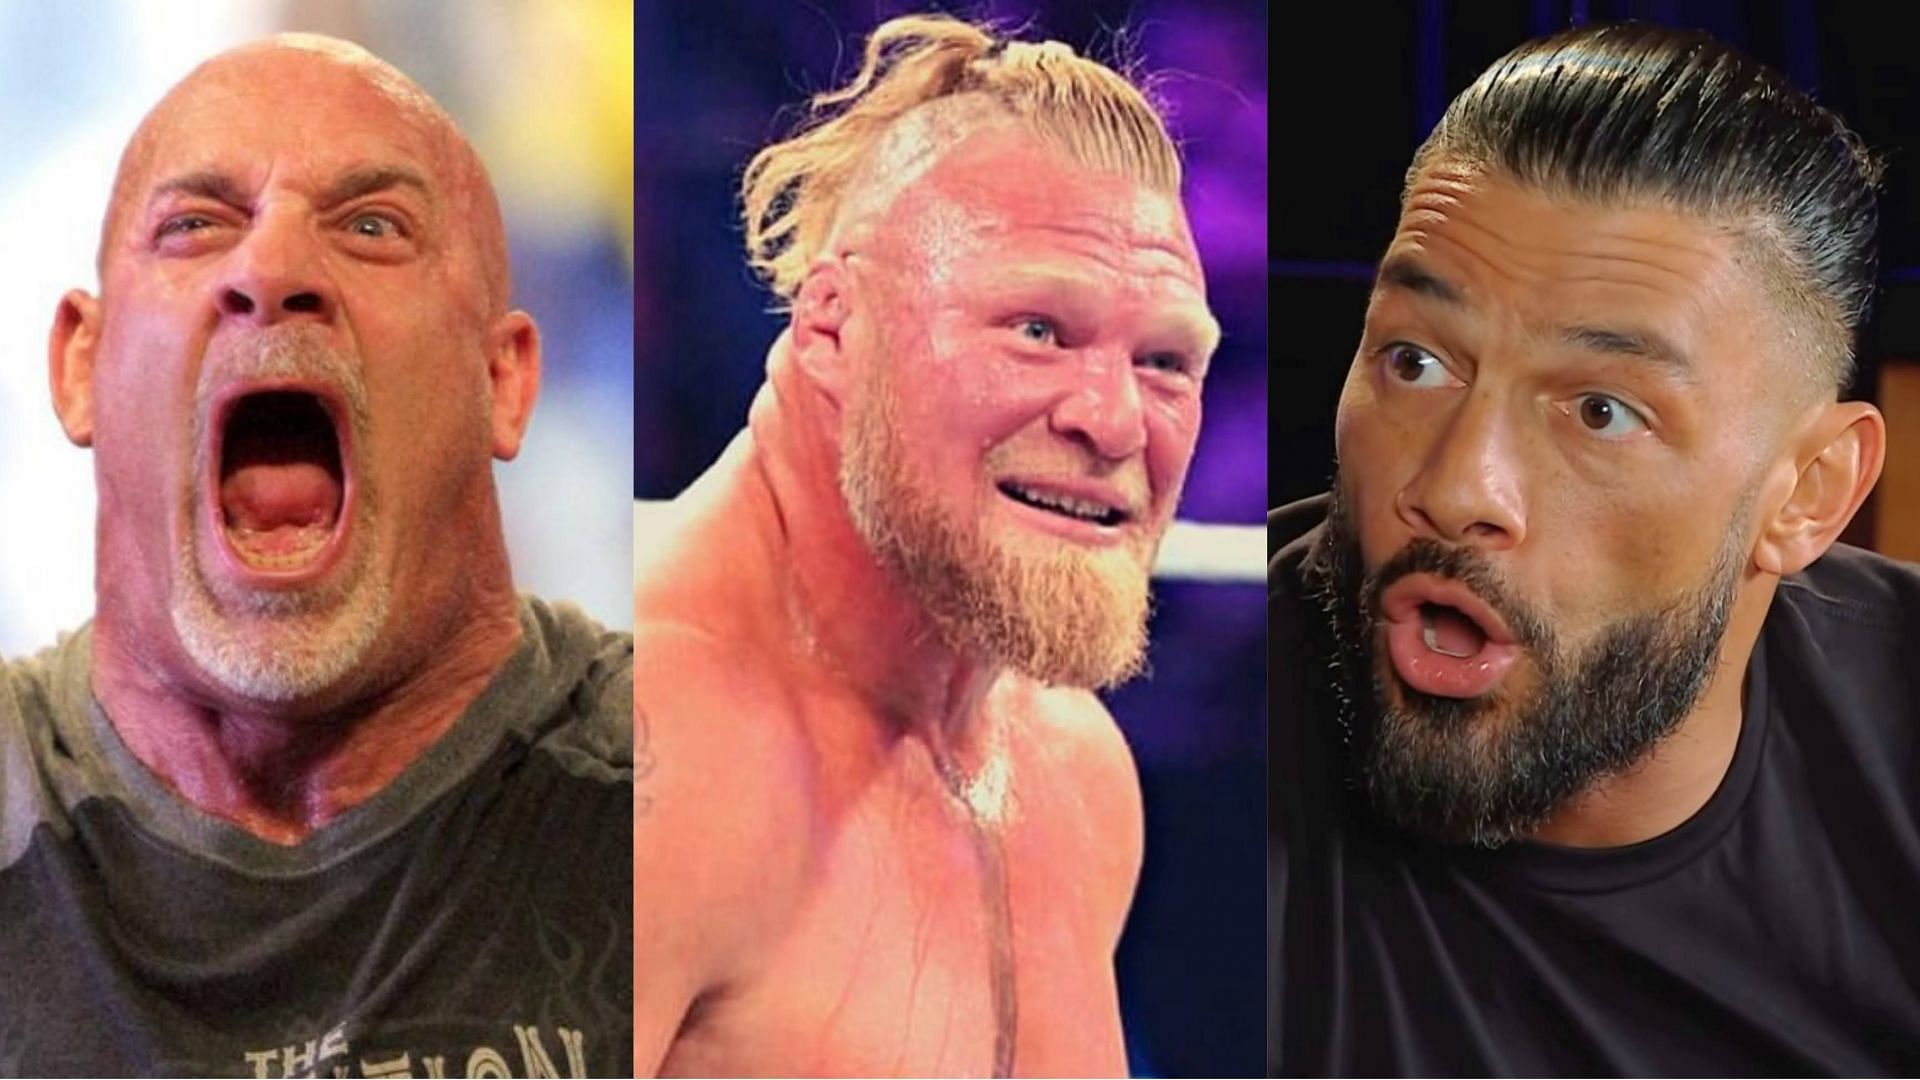 Goldberg (left), Brock Lesnar (center), and Roman Reigns (right)